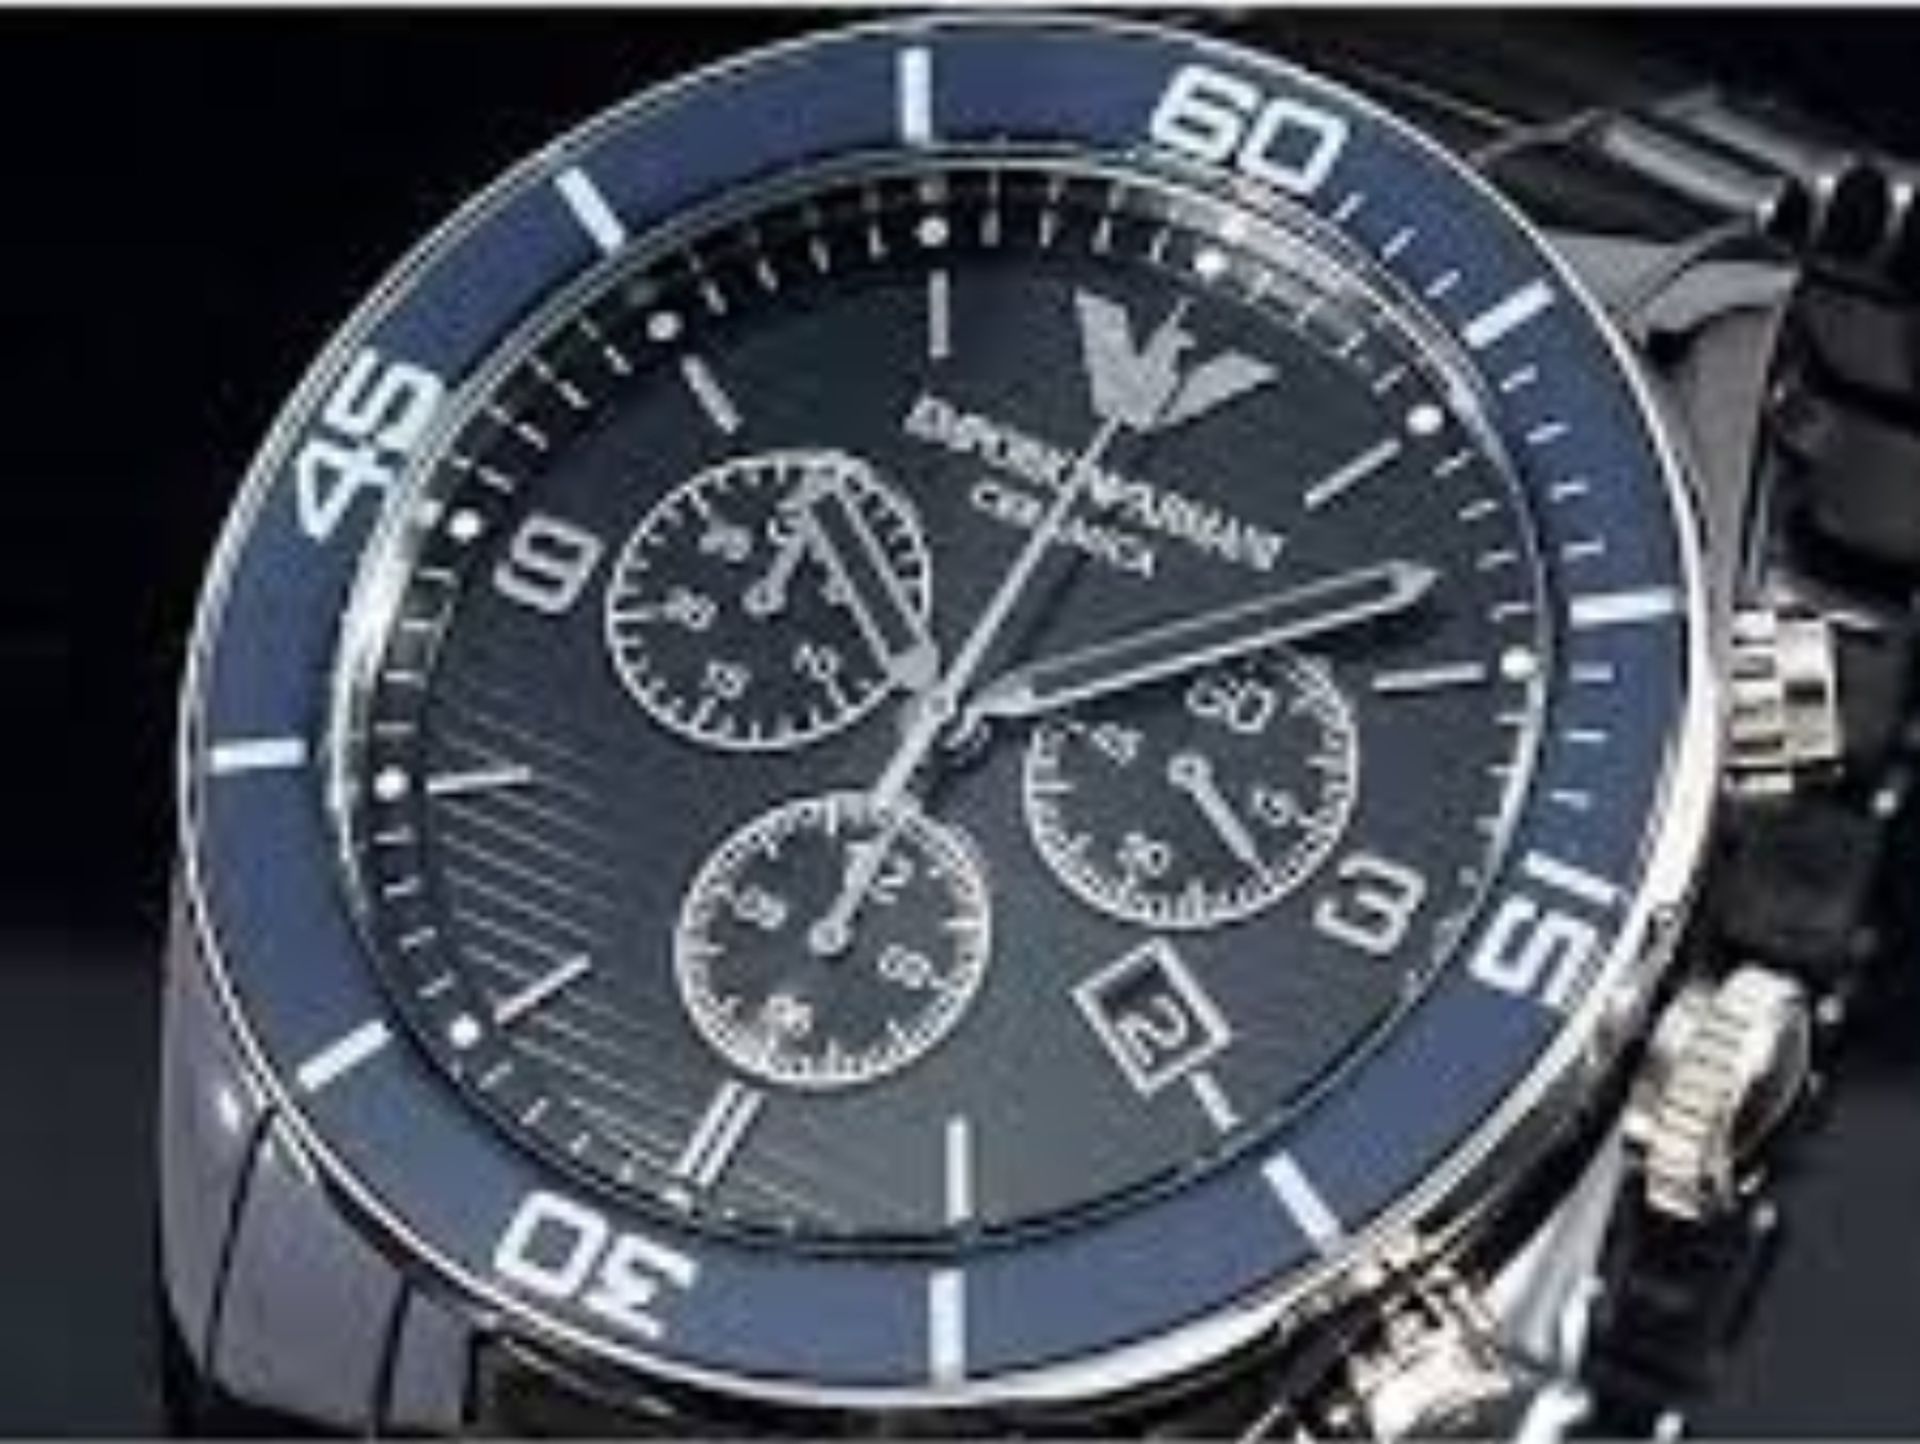 Emporio Armani AR1429 Men's Black Ceramica Chronograph Watch - Image 5 of 7